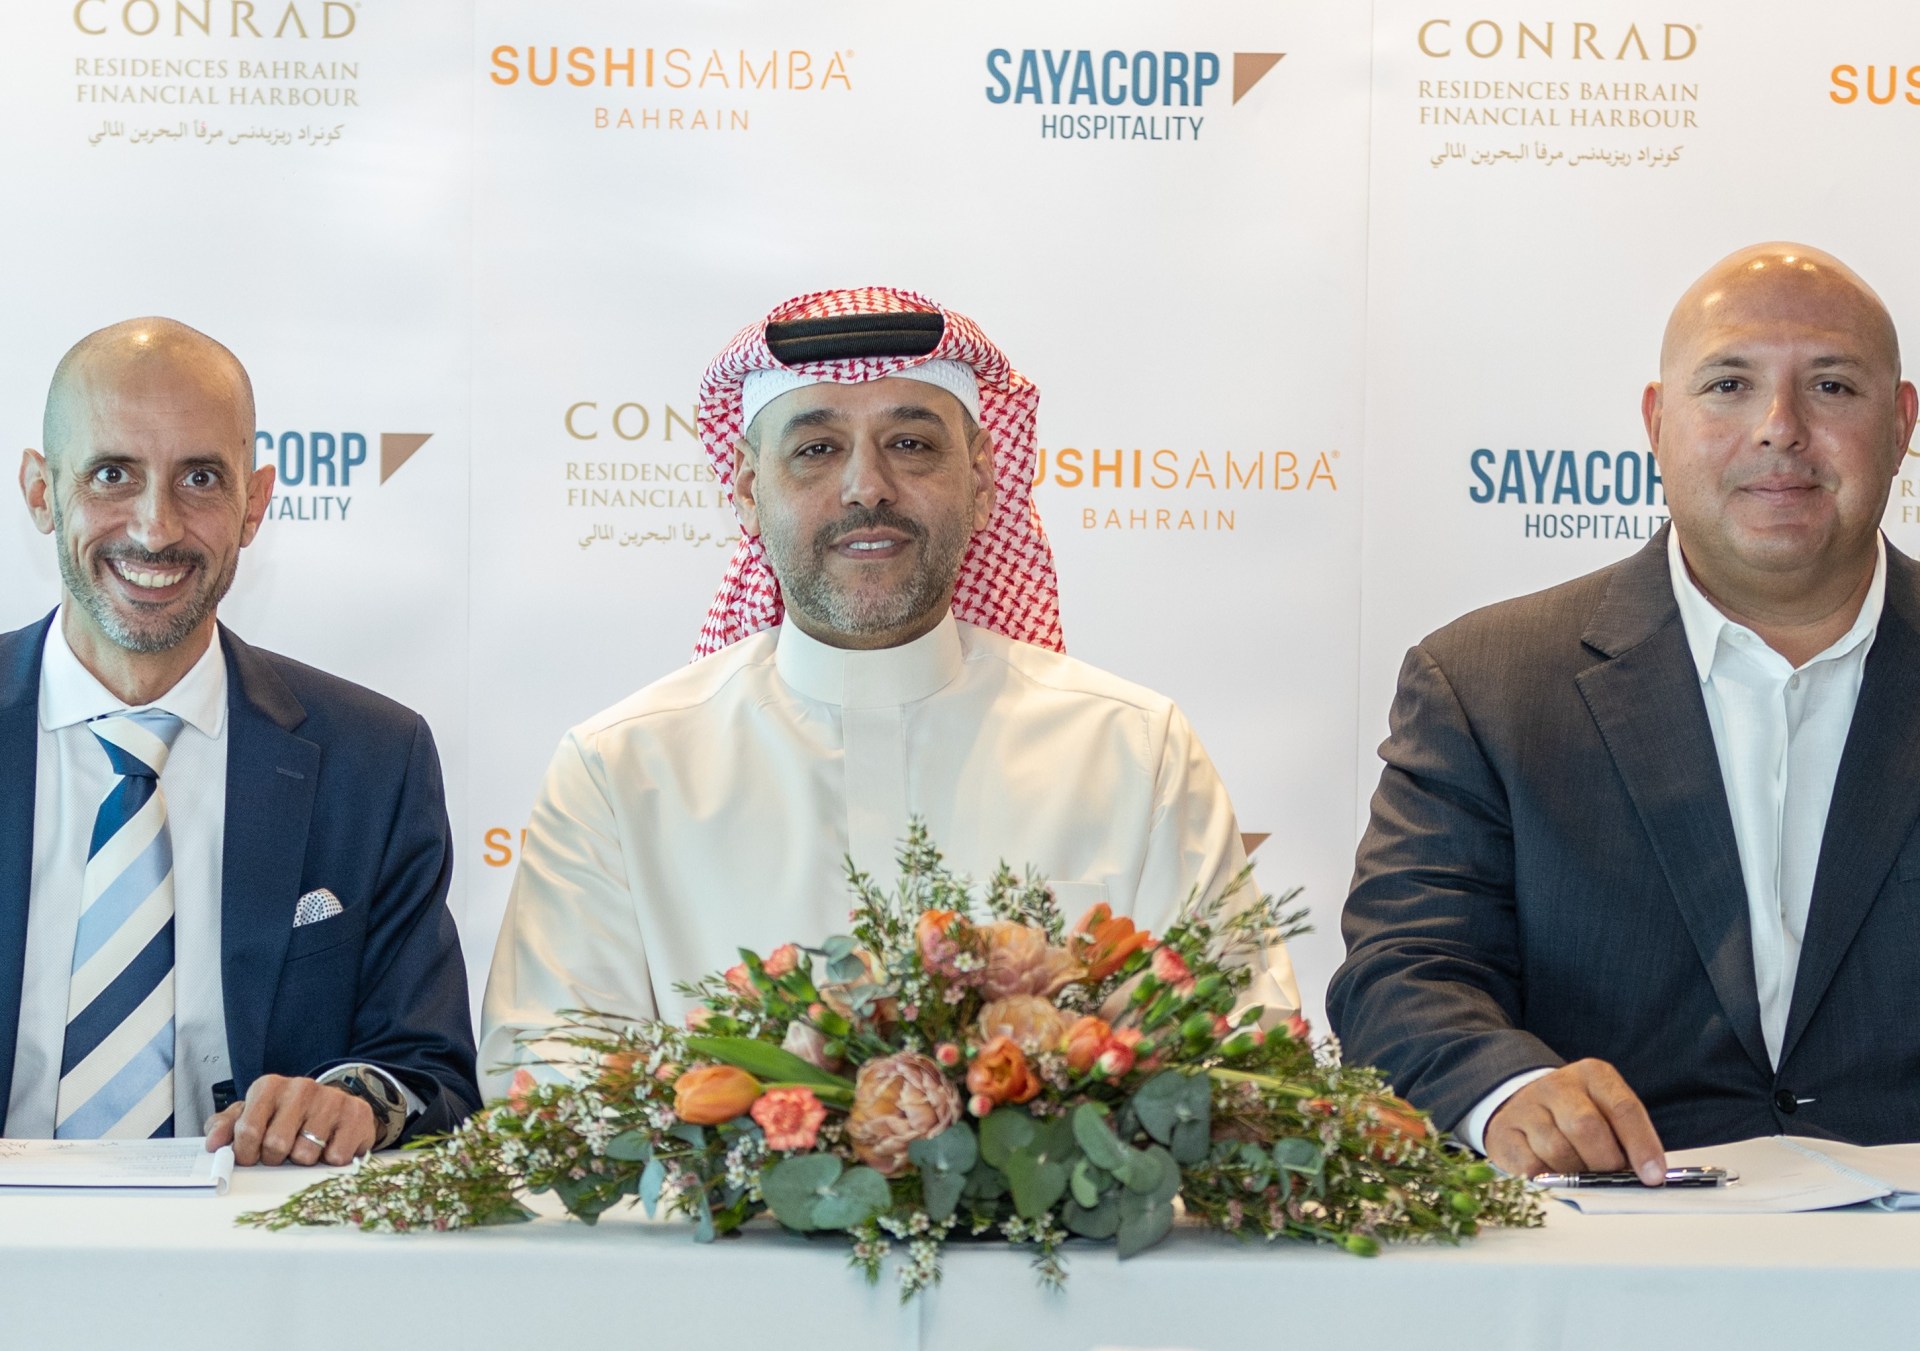 SUSHISAMBA Conrad Residences Bahrain Financial Harbour Signing